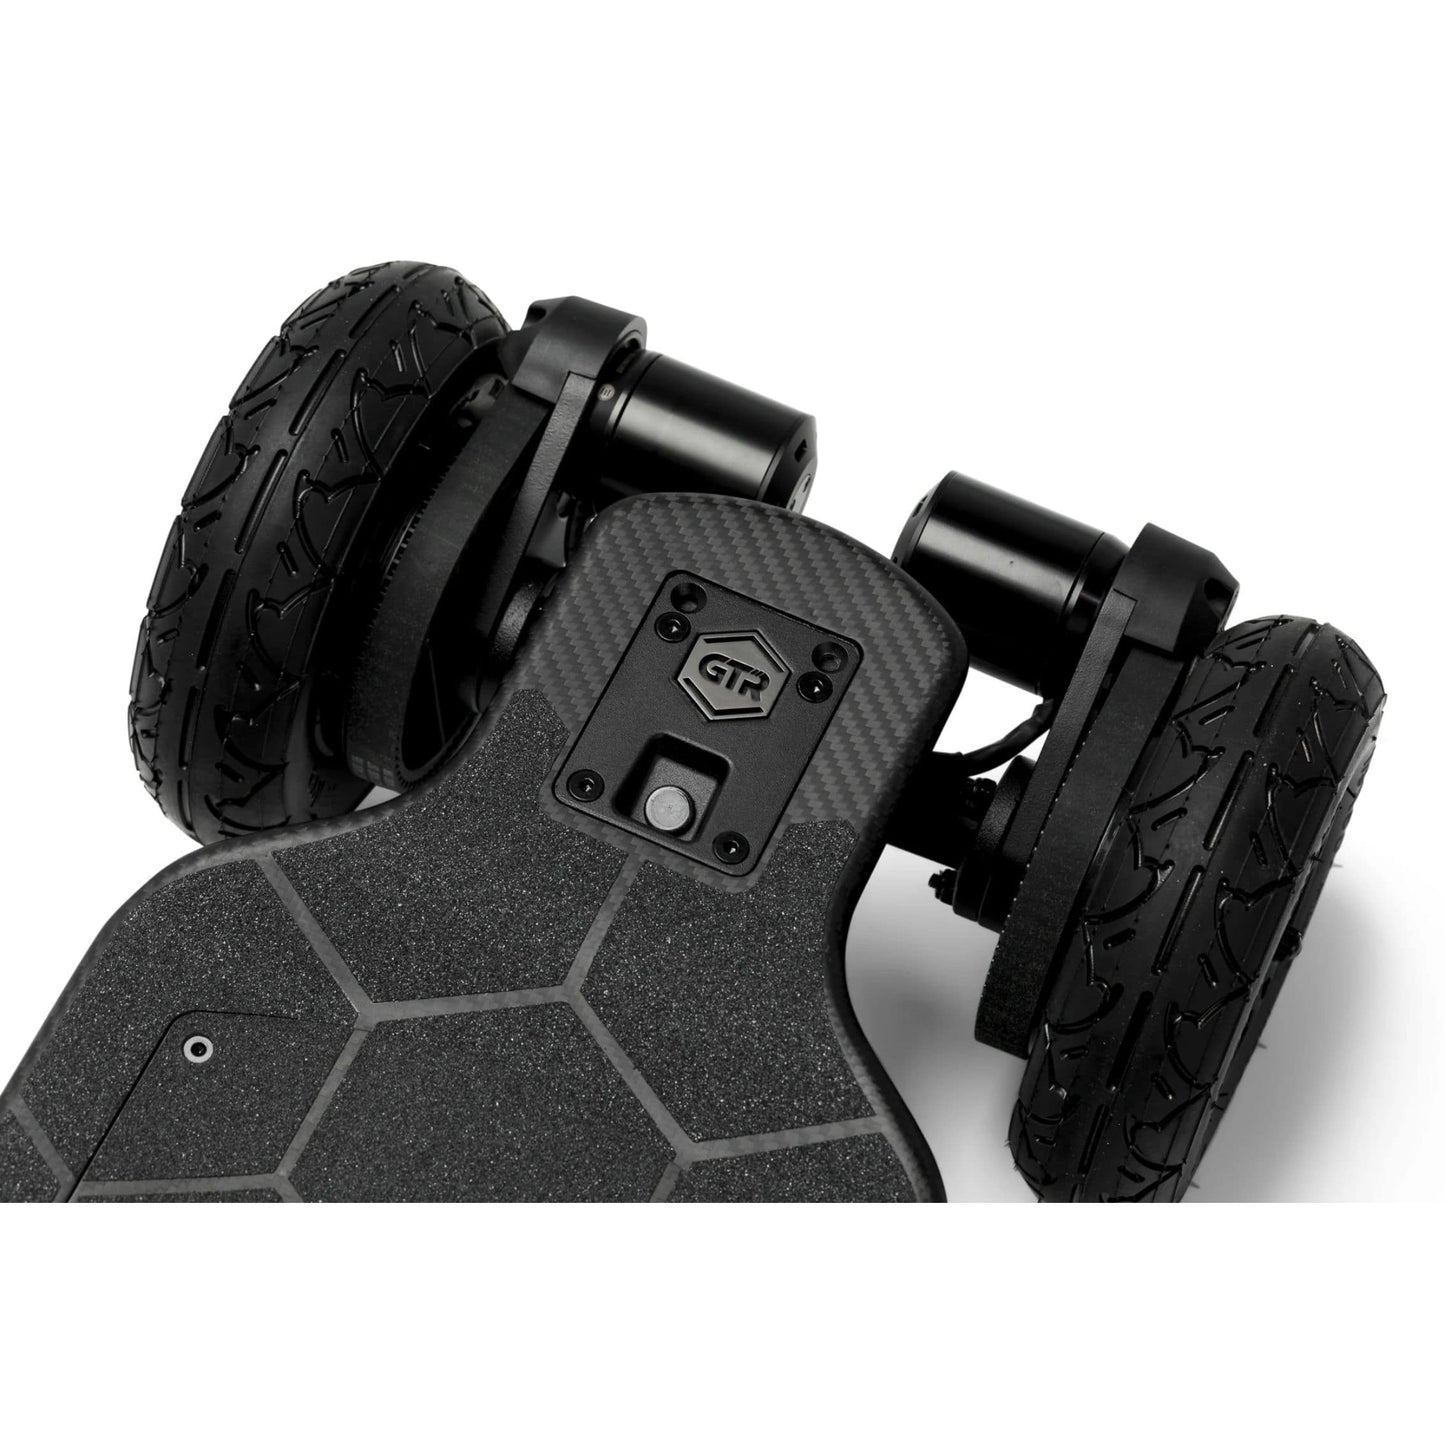 Evolve Carbon GTR AT Electric Skateboard